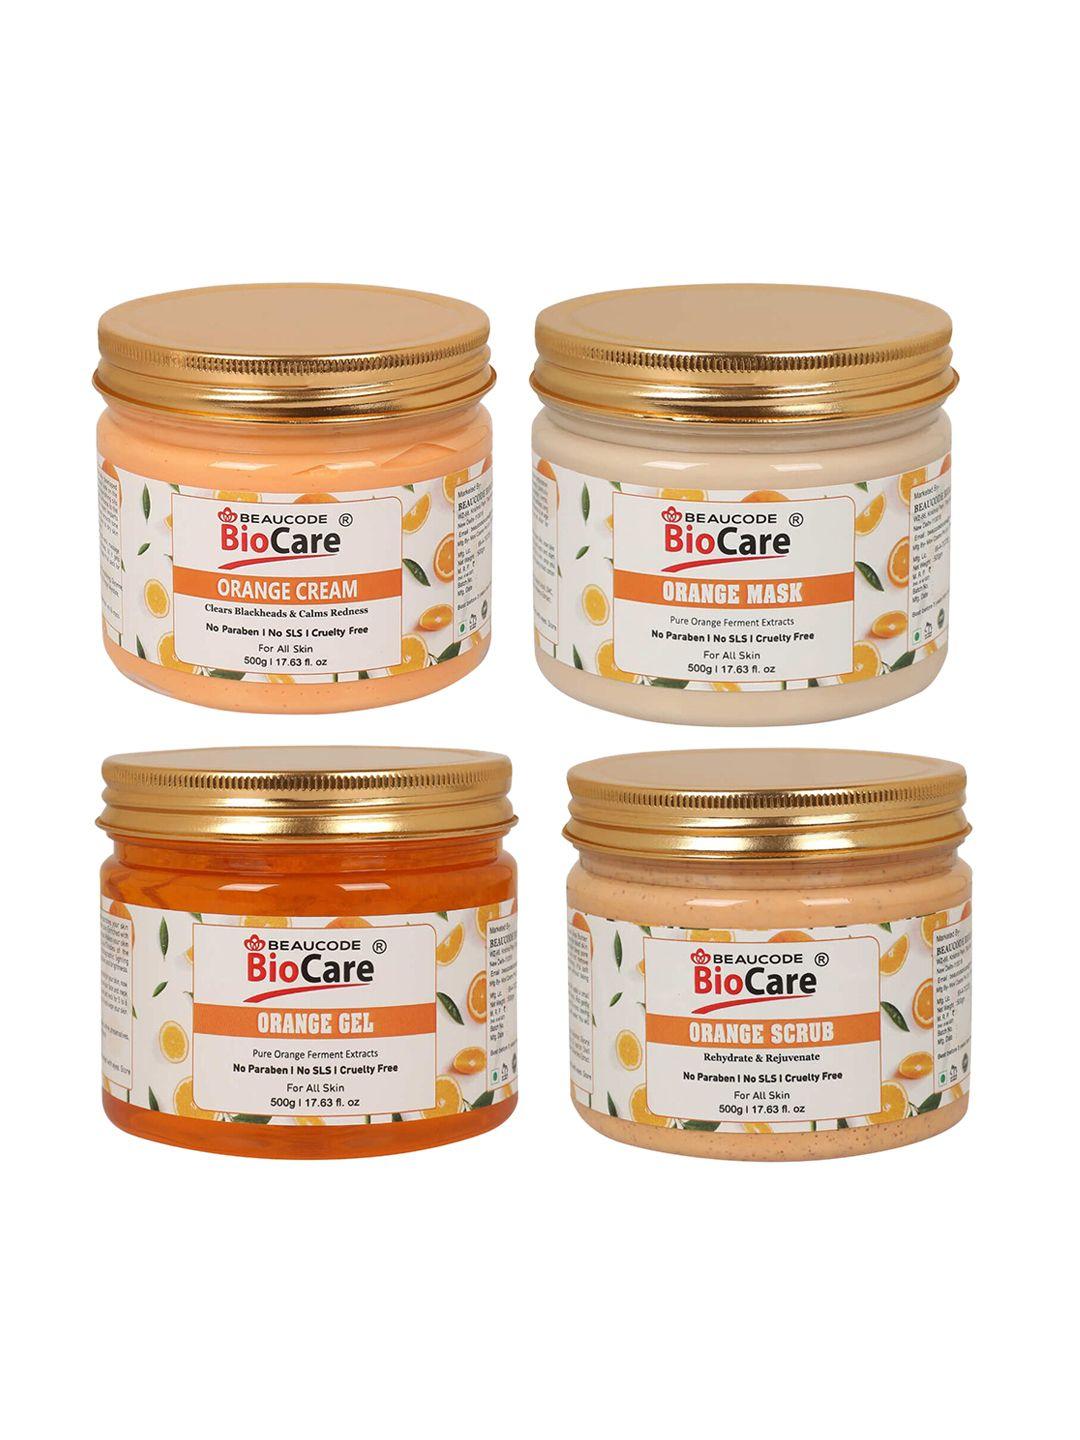 beaucode biocare orange facial kit for all skin types - 2000g